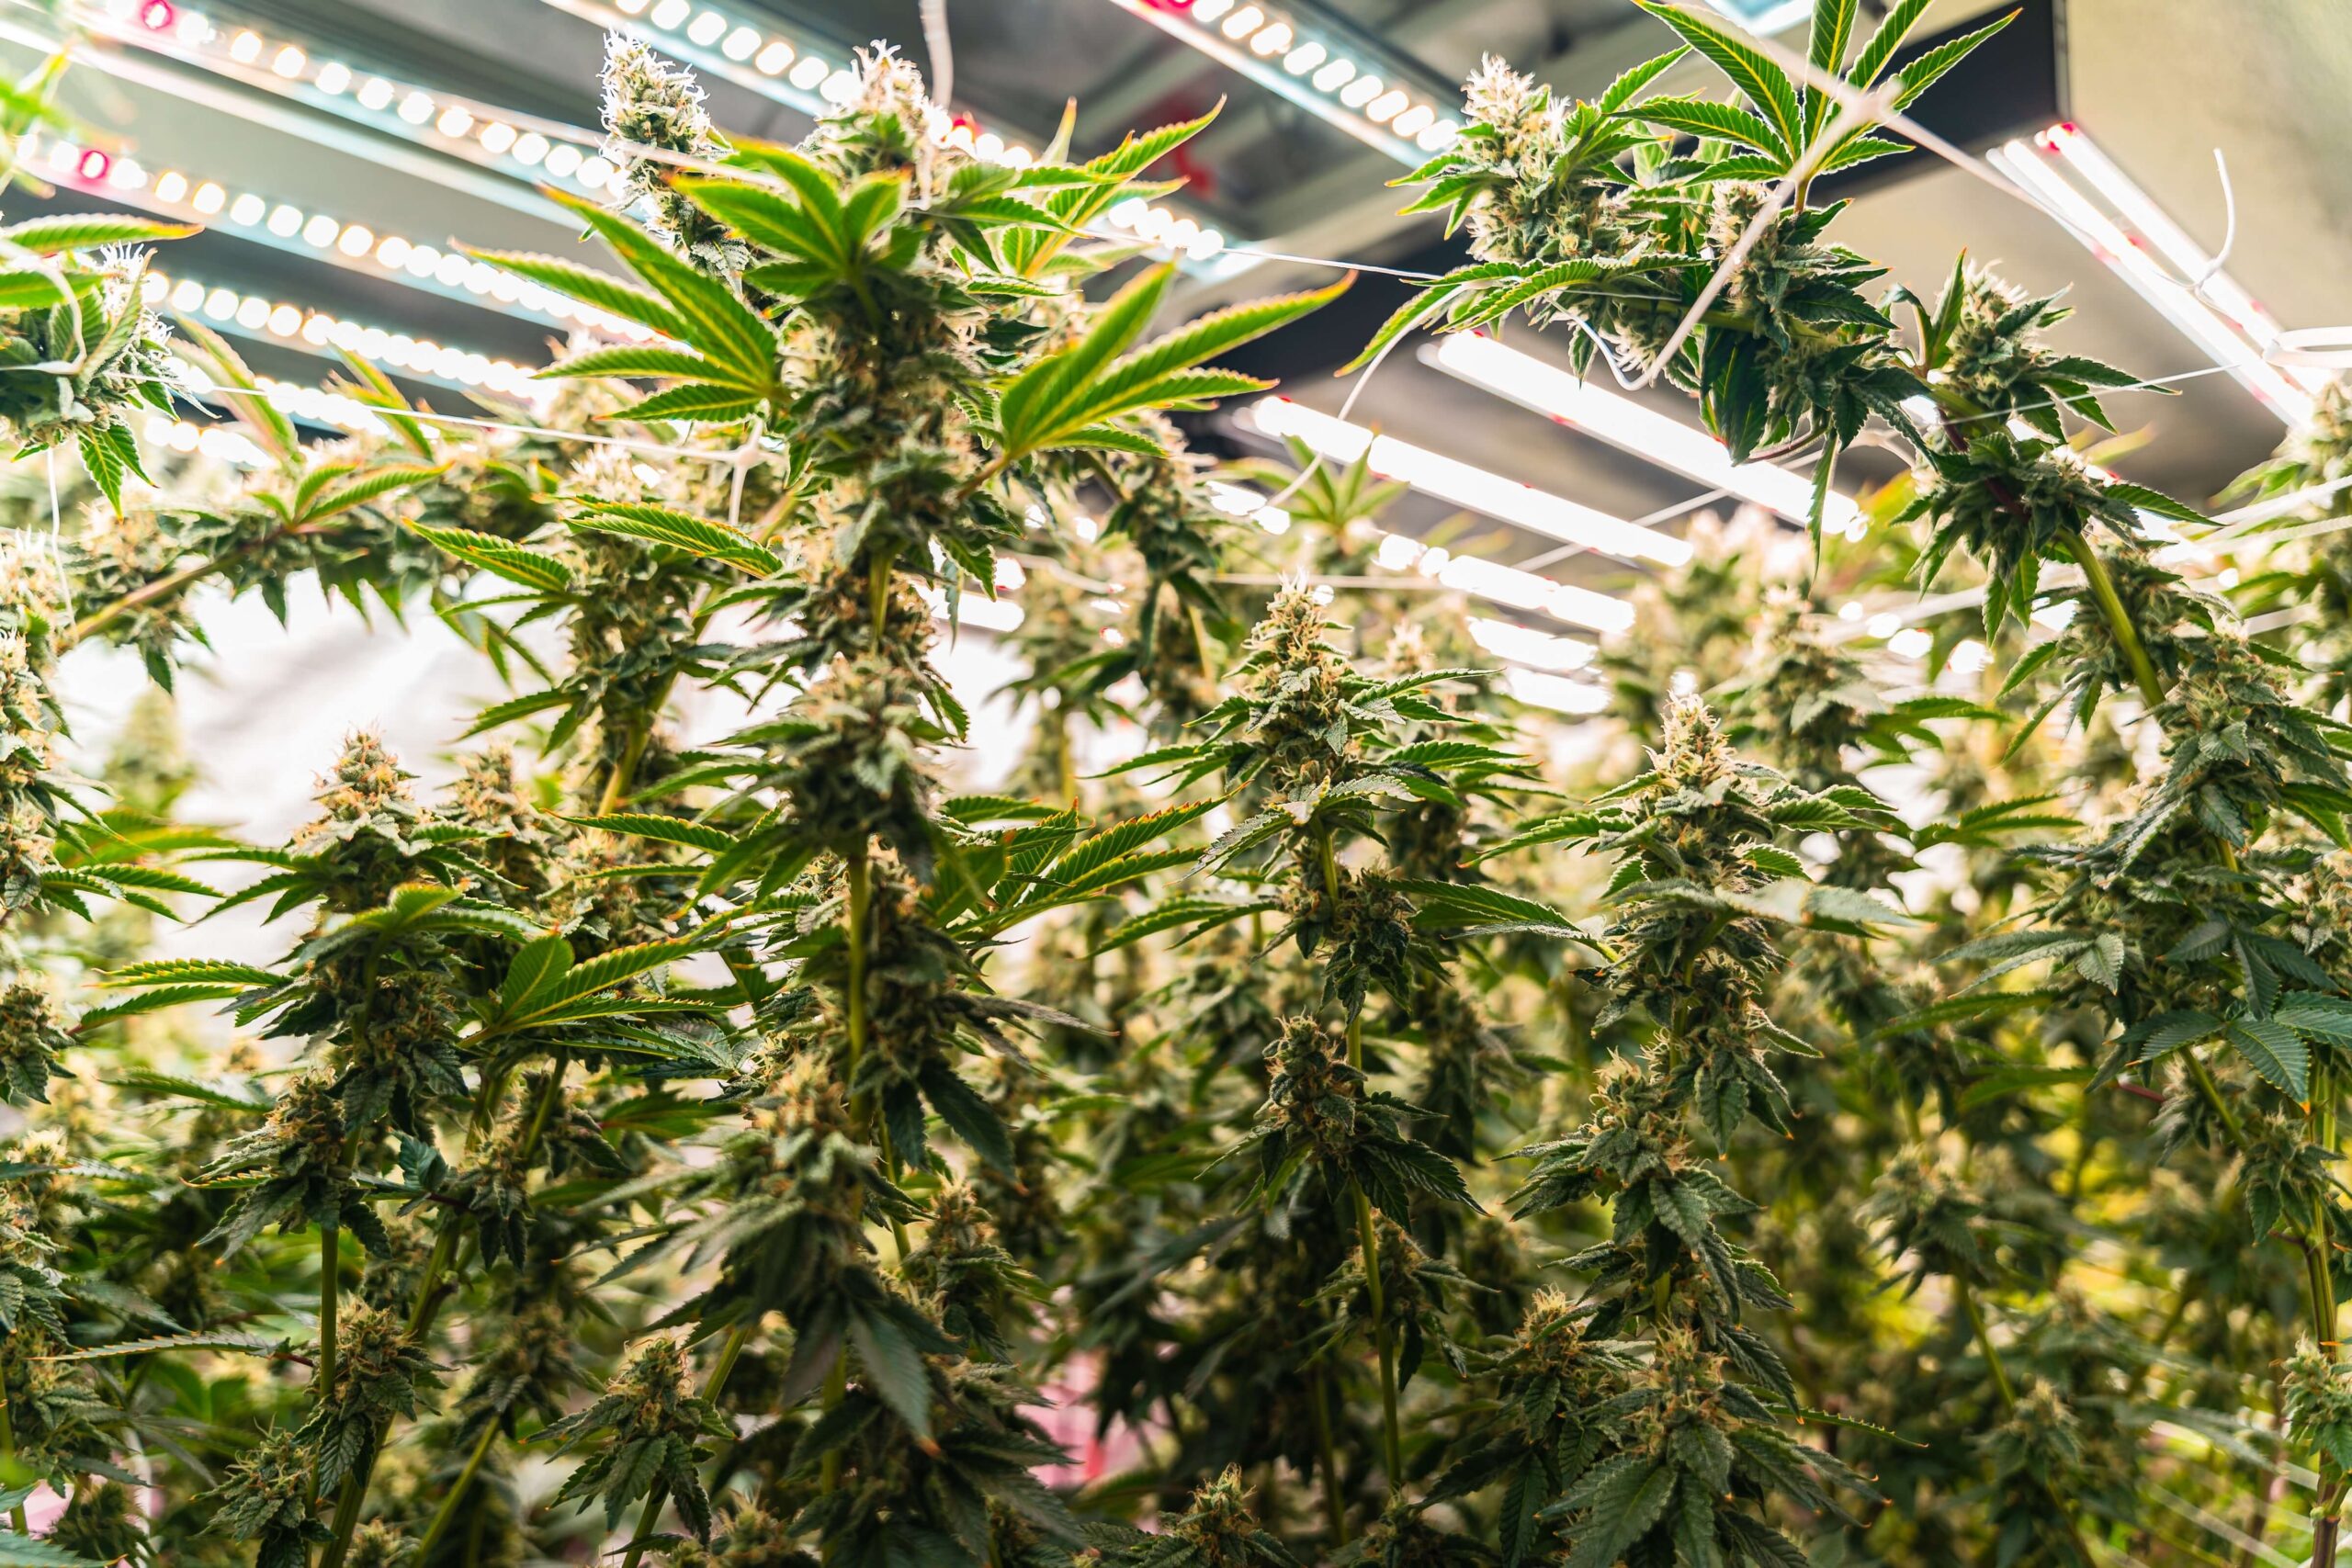 How LED Grow Light Improve Marijuana Cultivation?